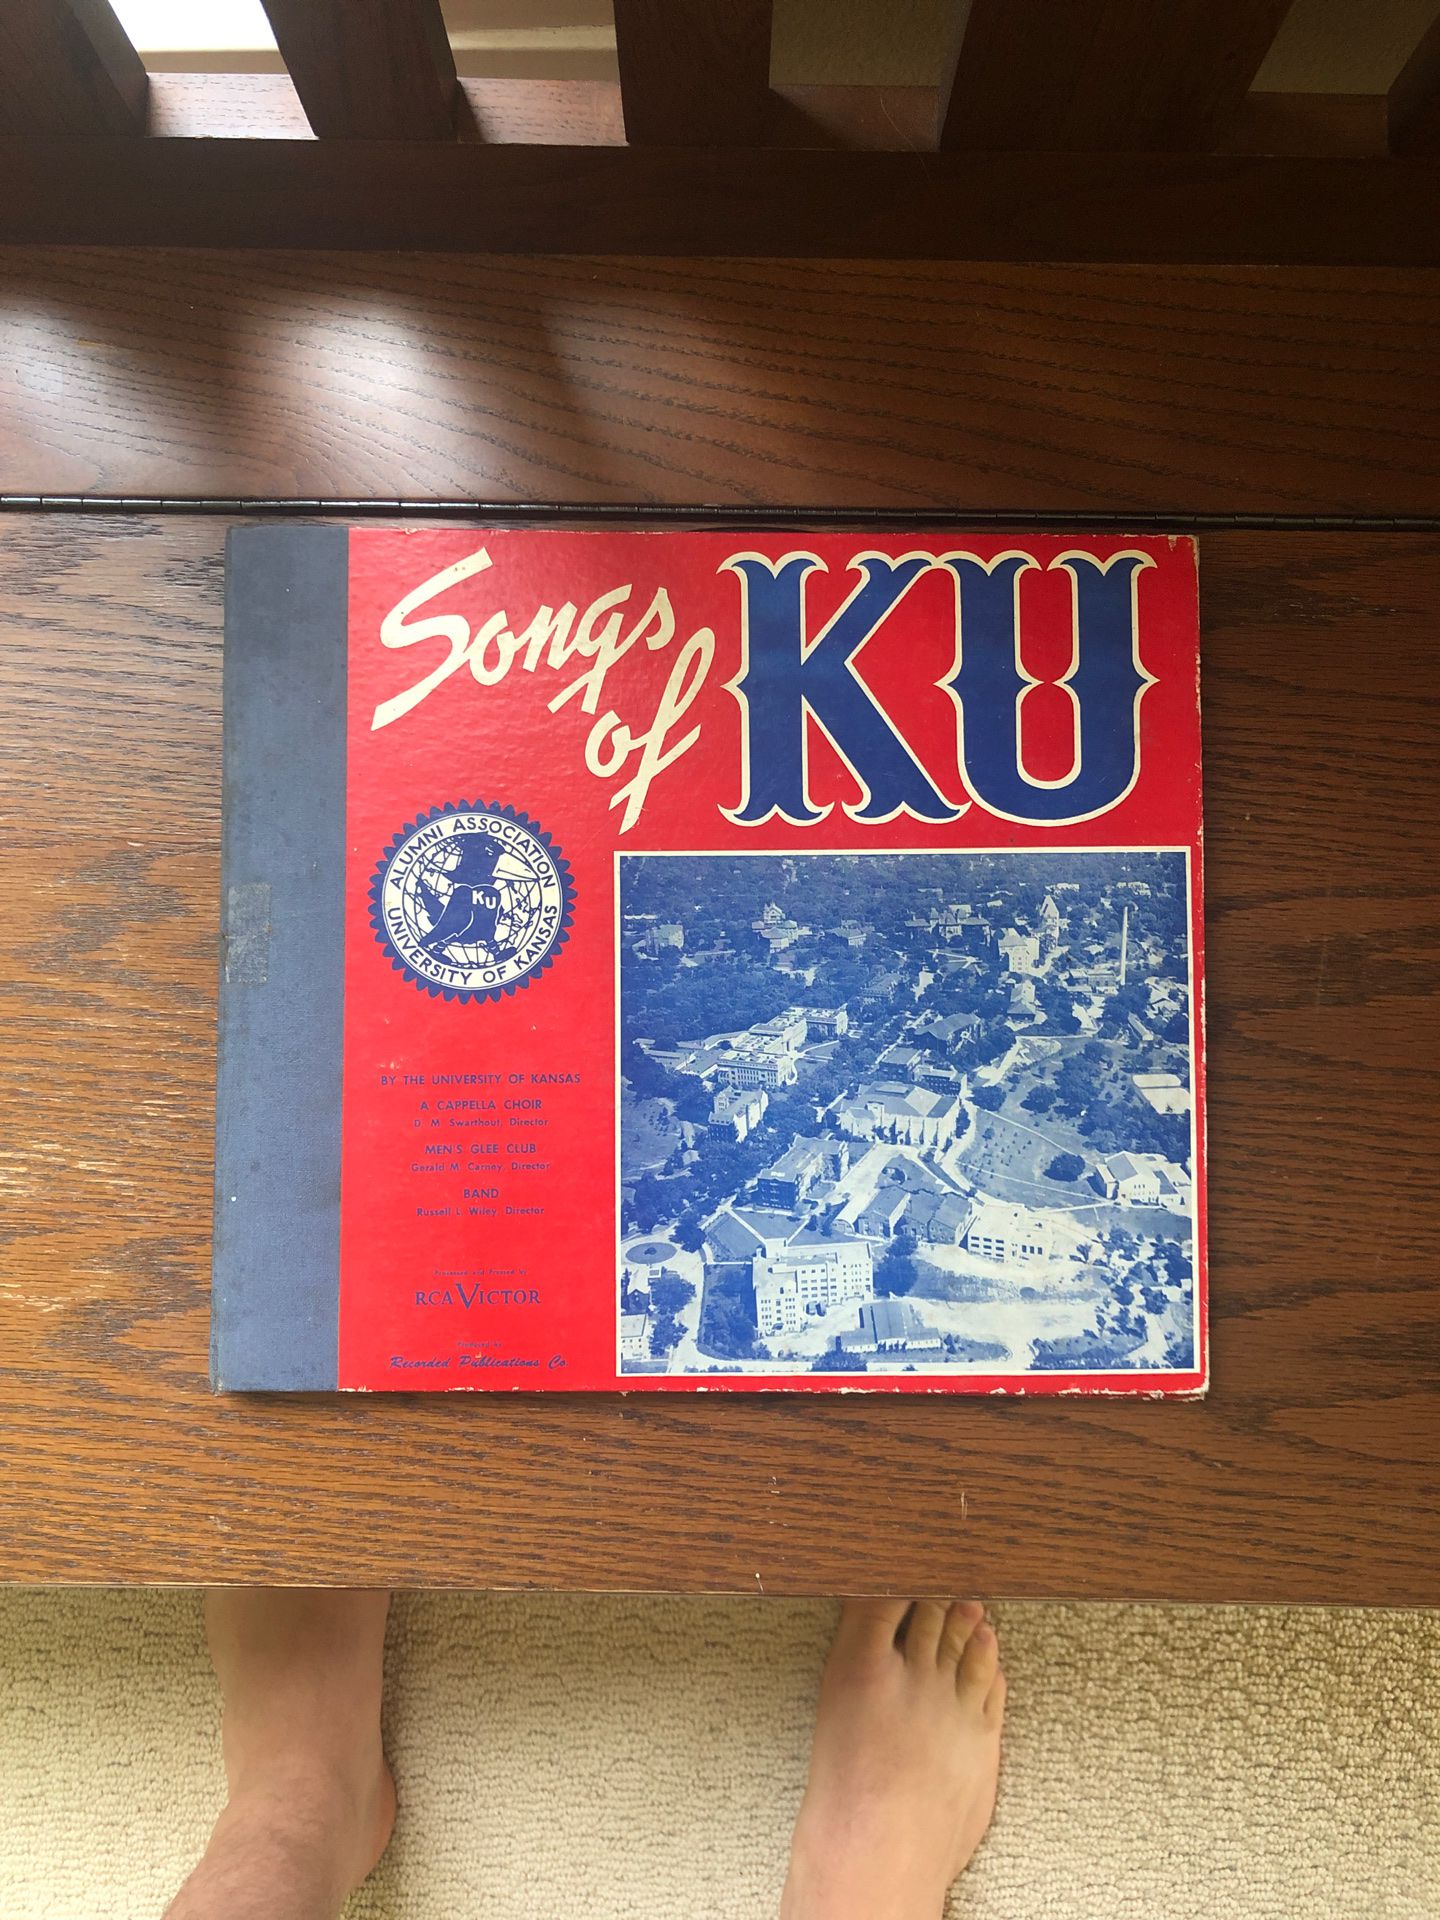 Kansas University Fight songs